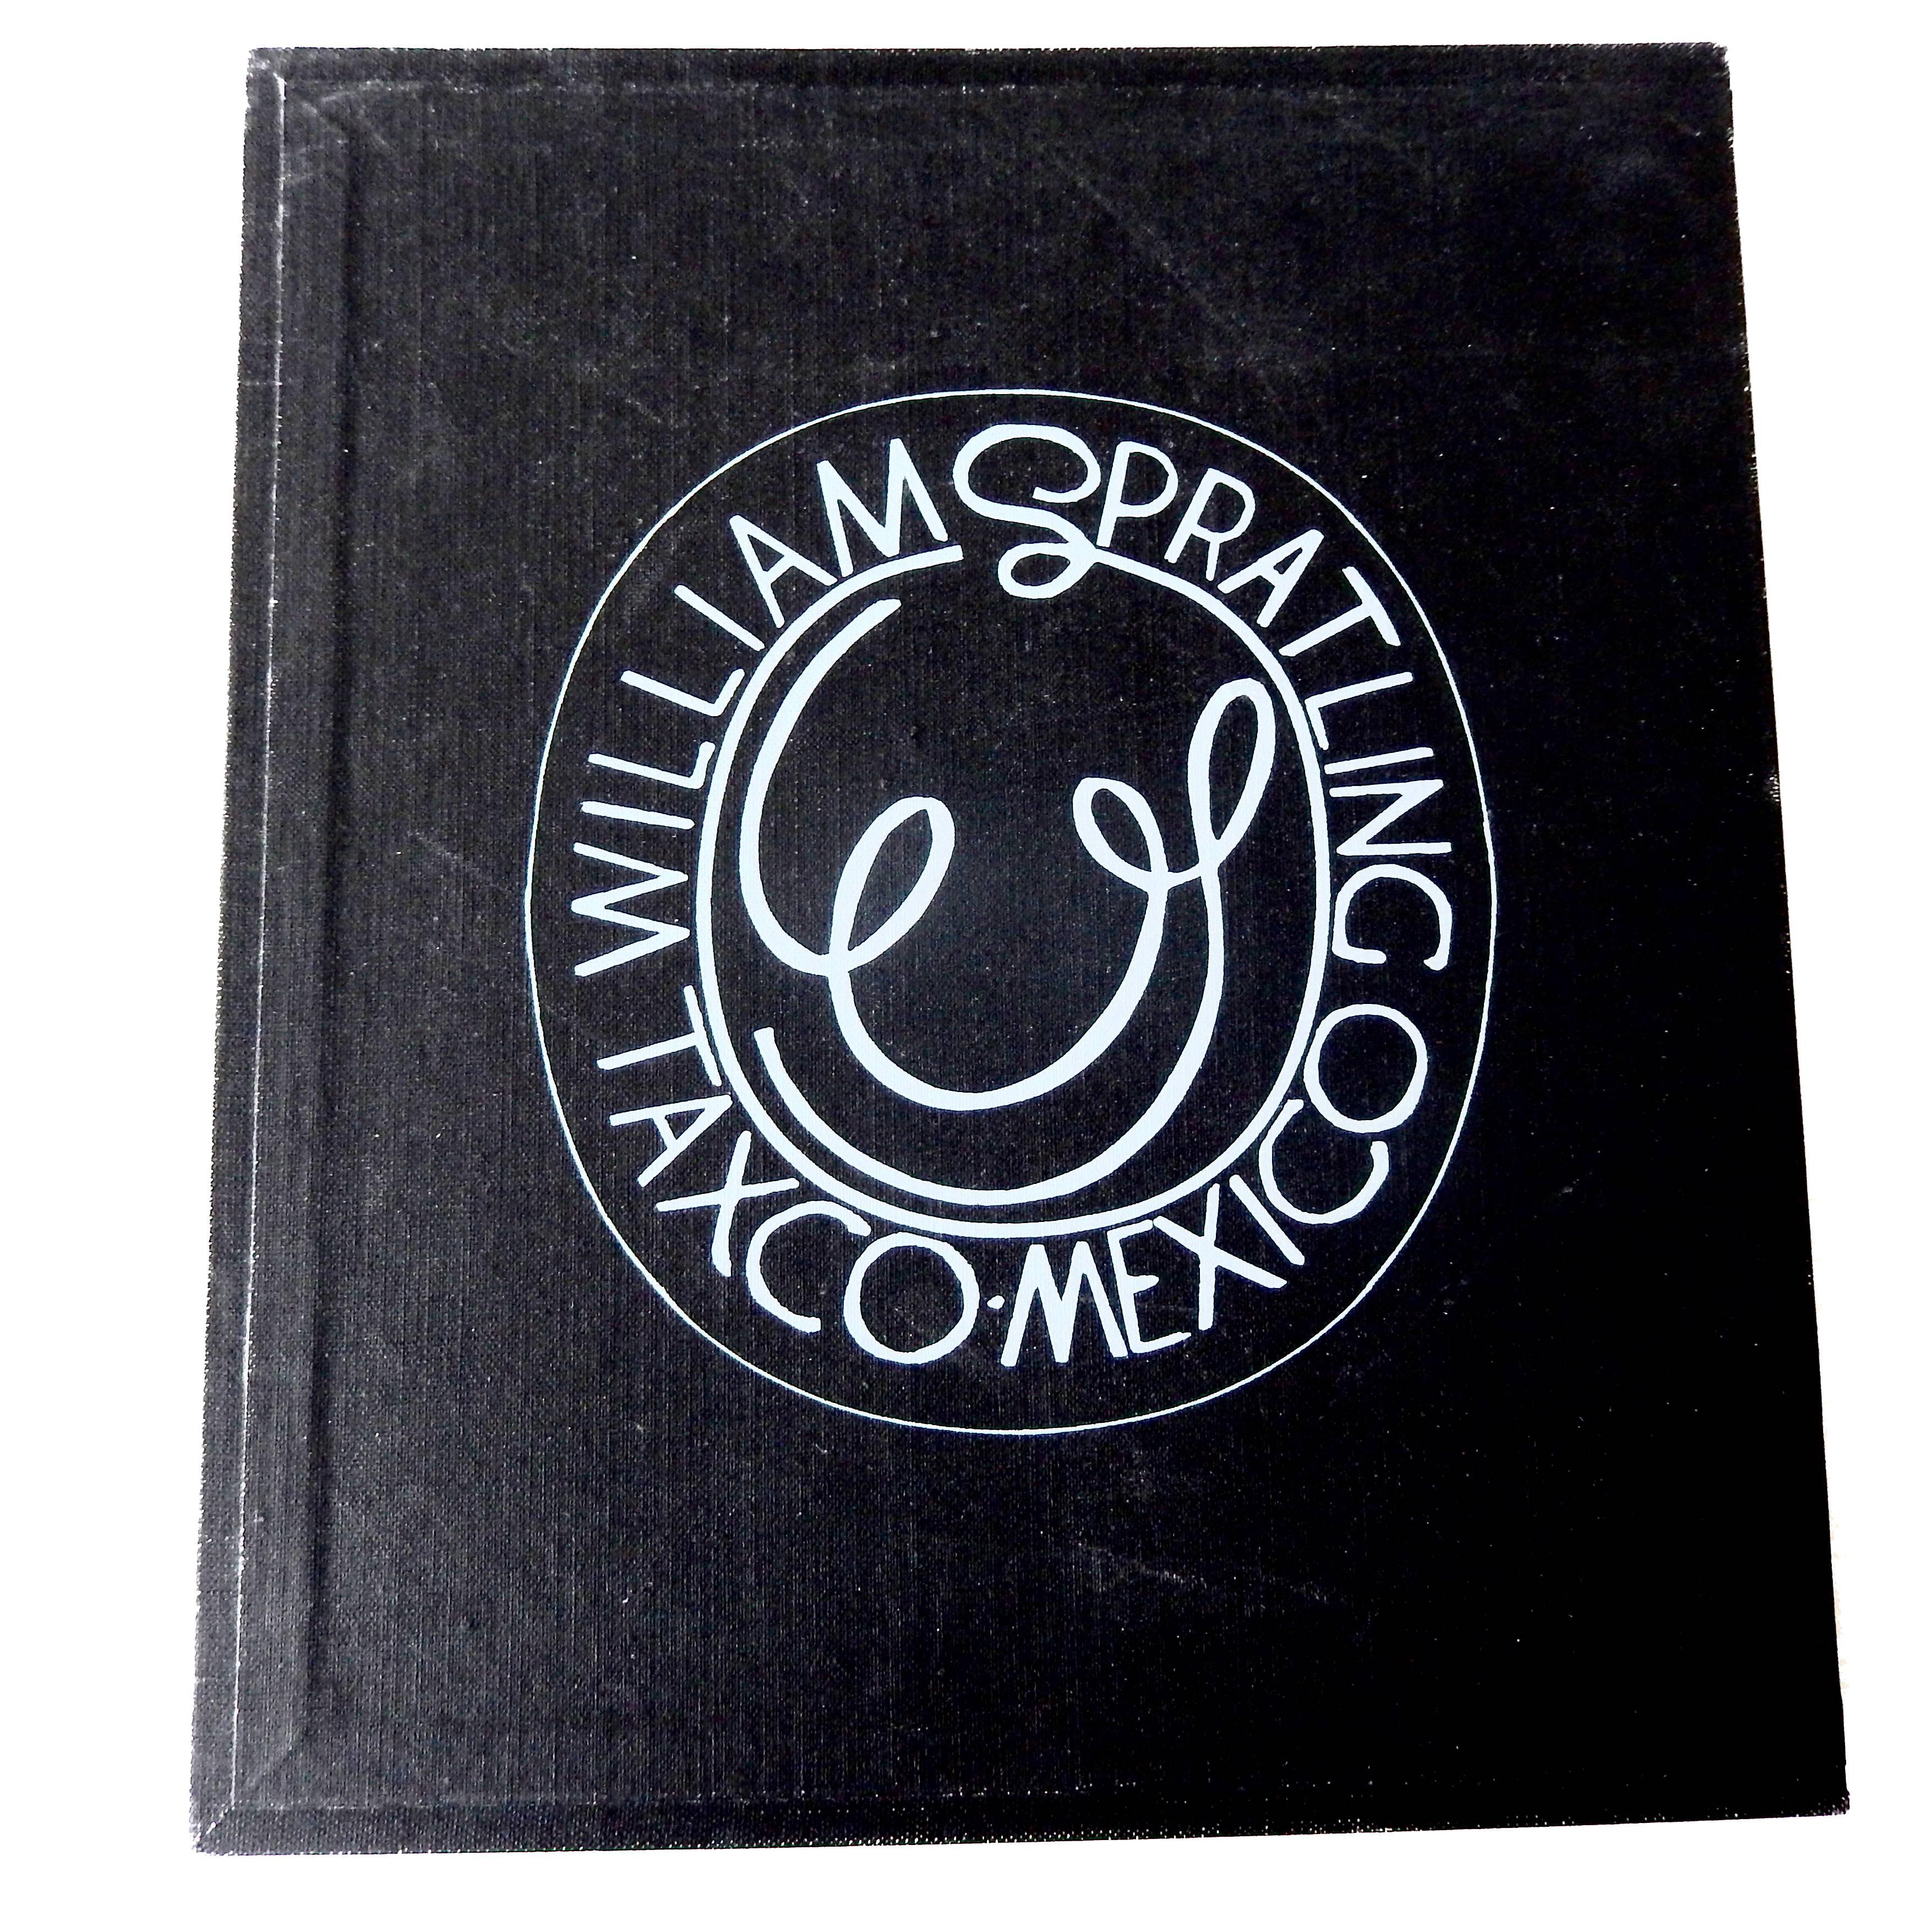 Special Edition Portfolio of Original Sketches by William Spratling, 1987 For Sale